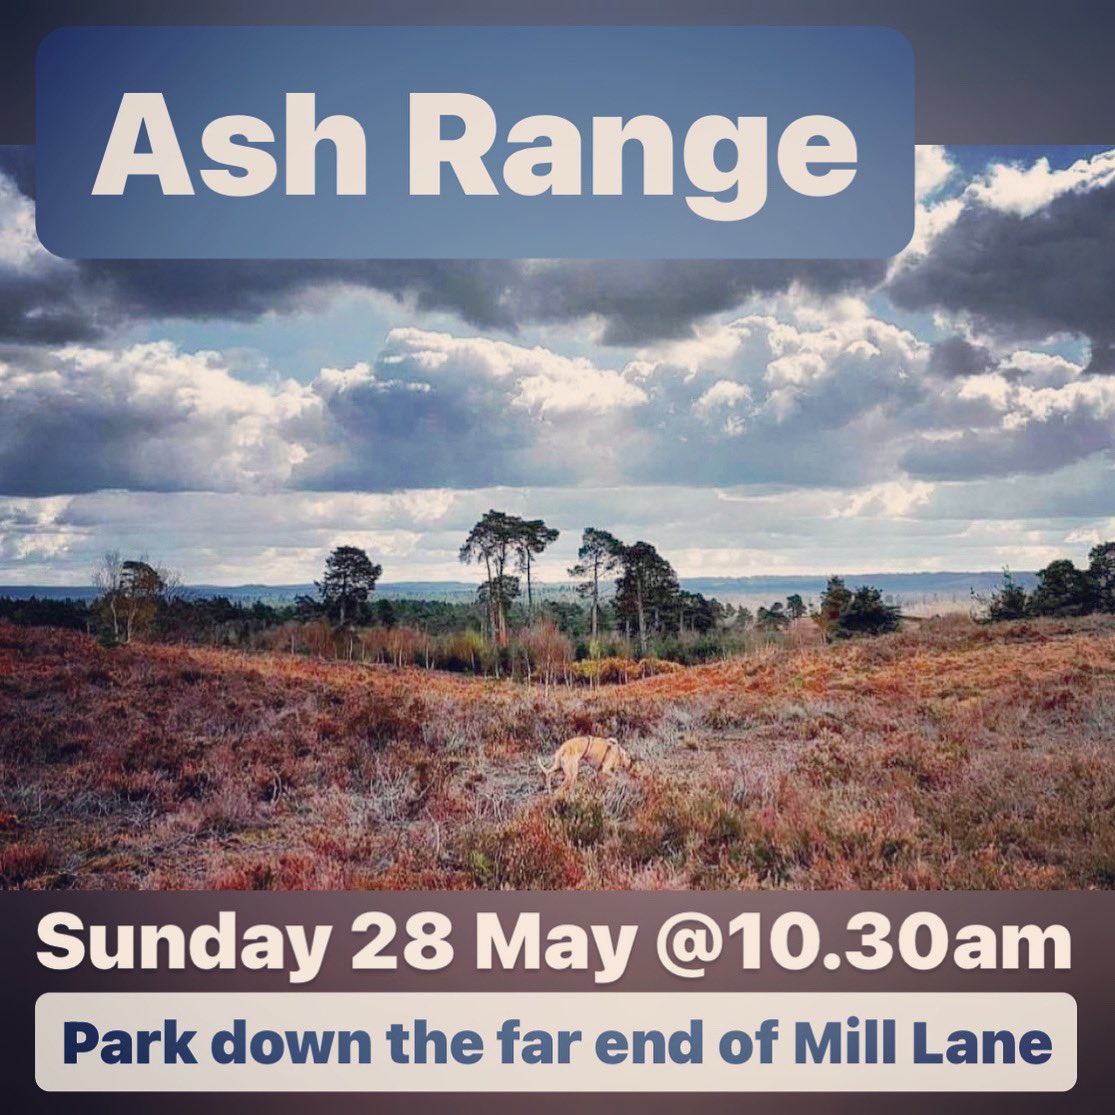 Surrey Sighthound Walking Group’s next walk is on Sunday 28 May at Ash Range. 10.30am set off. Full details on Instagram instagram.com/p/CshMDyXKsZi/…